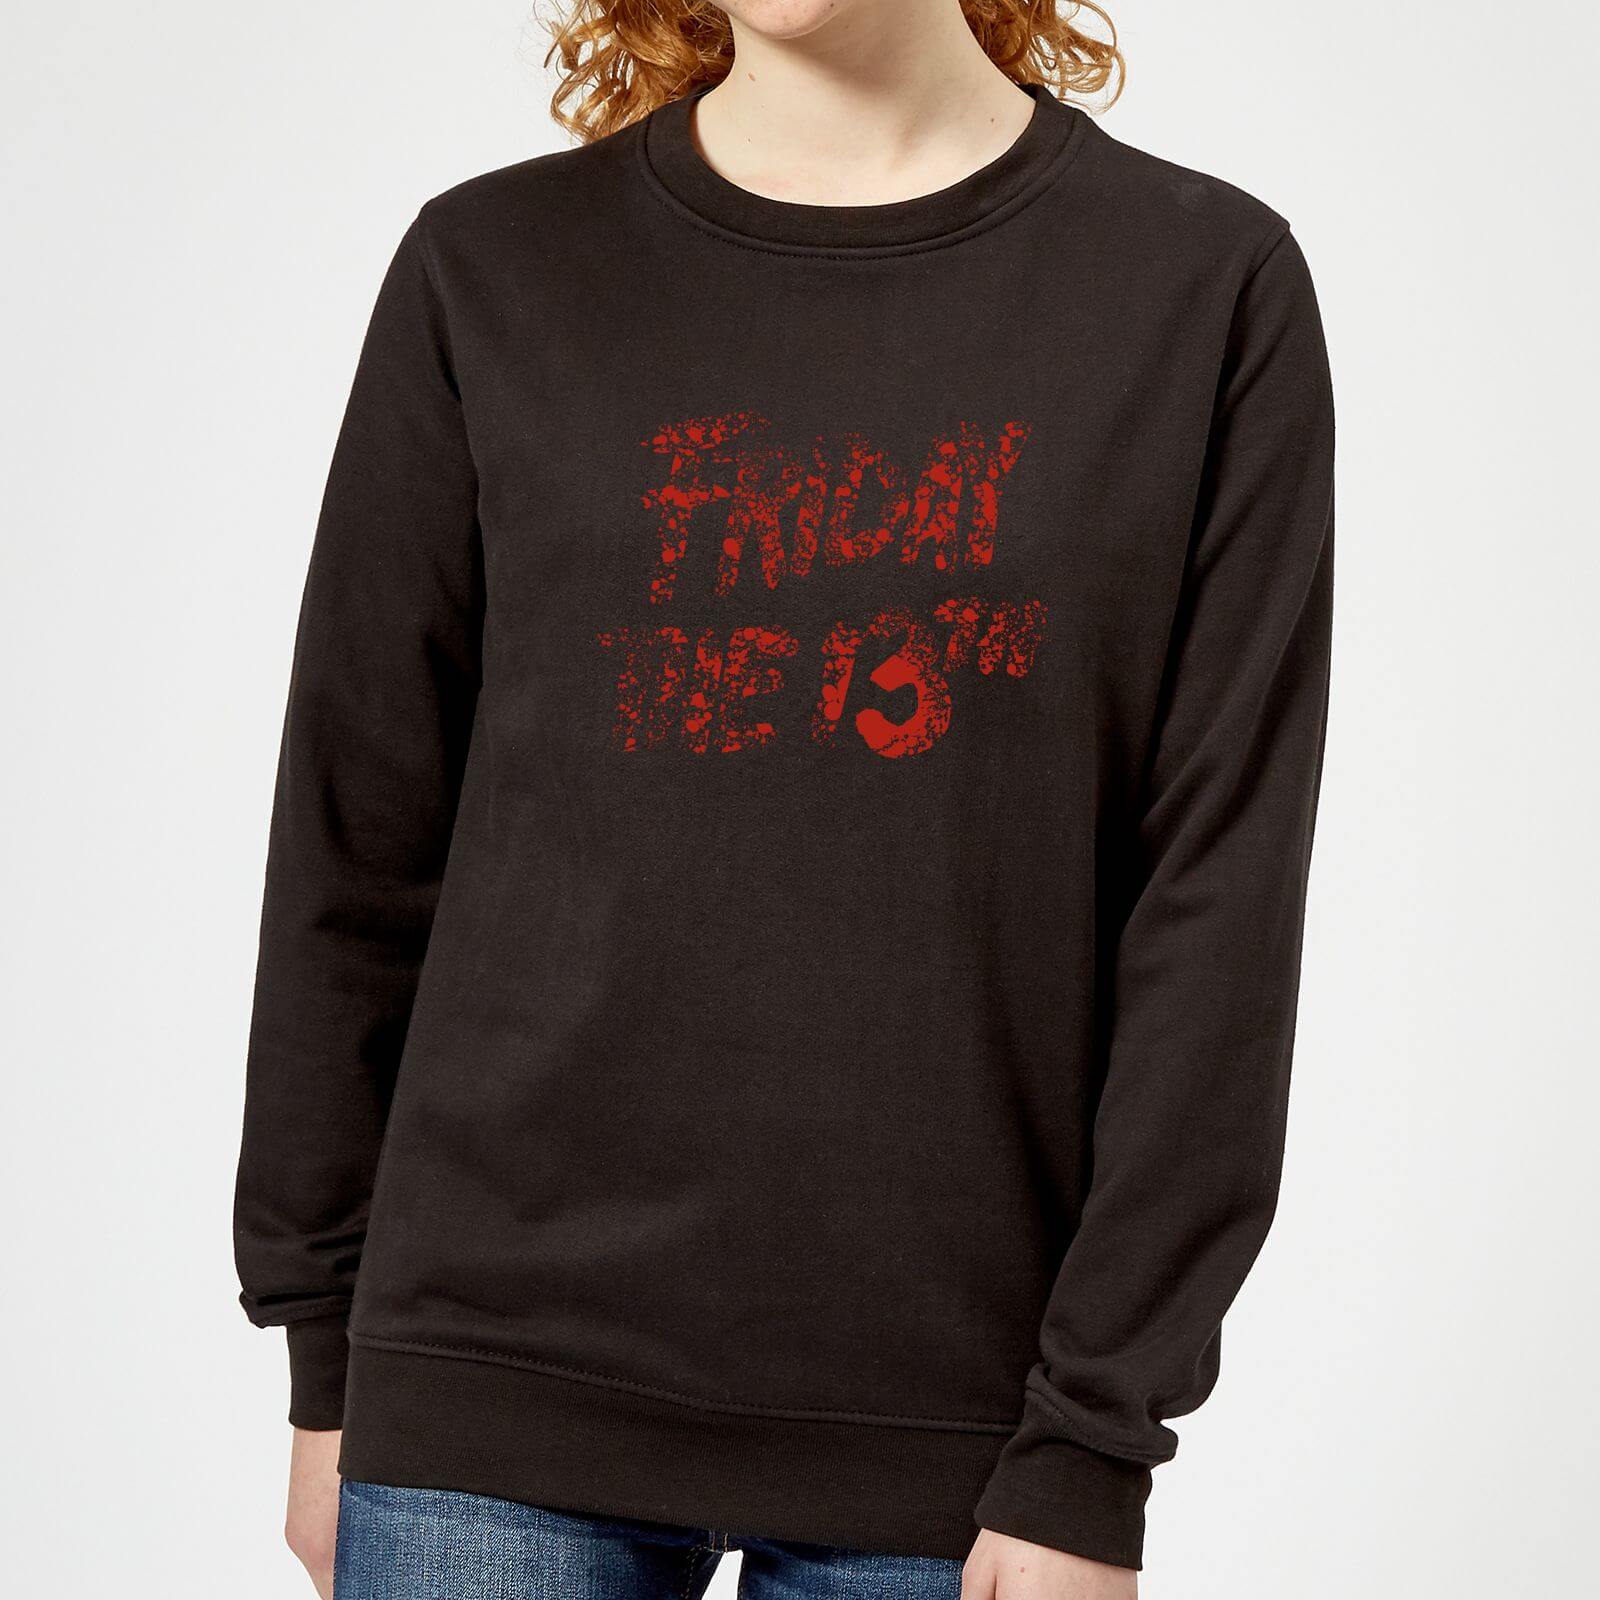 Friday the 13th Logo Blood Women's Sweatshirt - Black - 5XL - Black